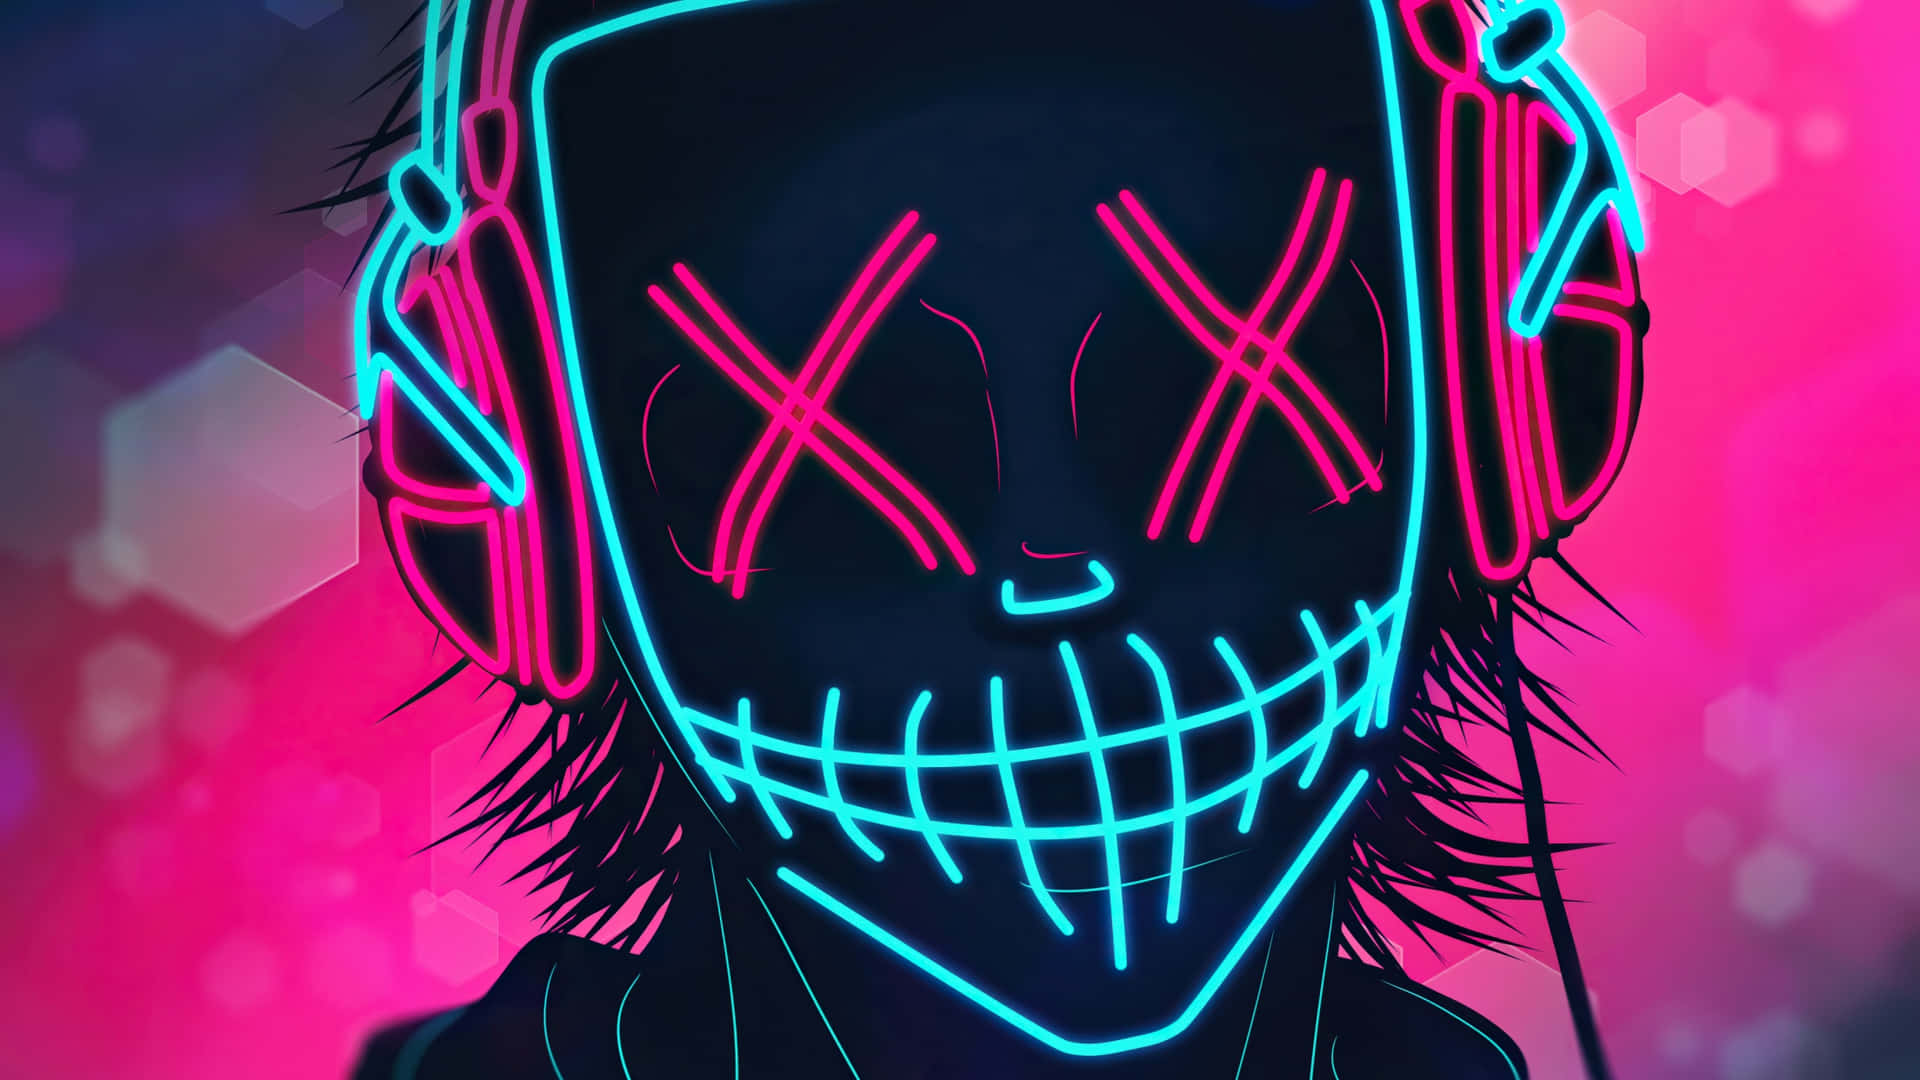 Download A Neon Skull With Headphones On His Head Wallpaper